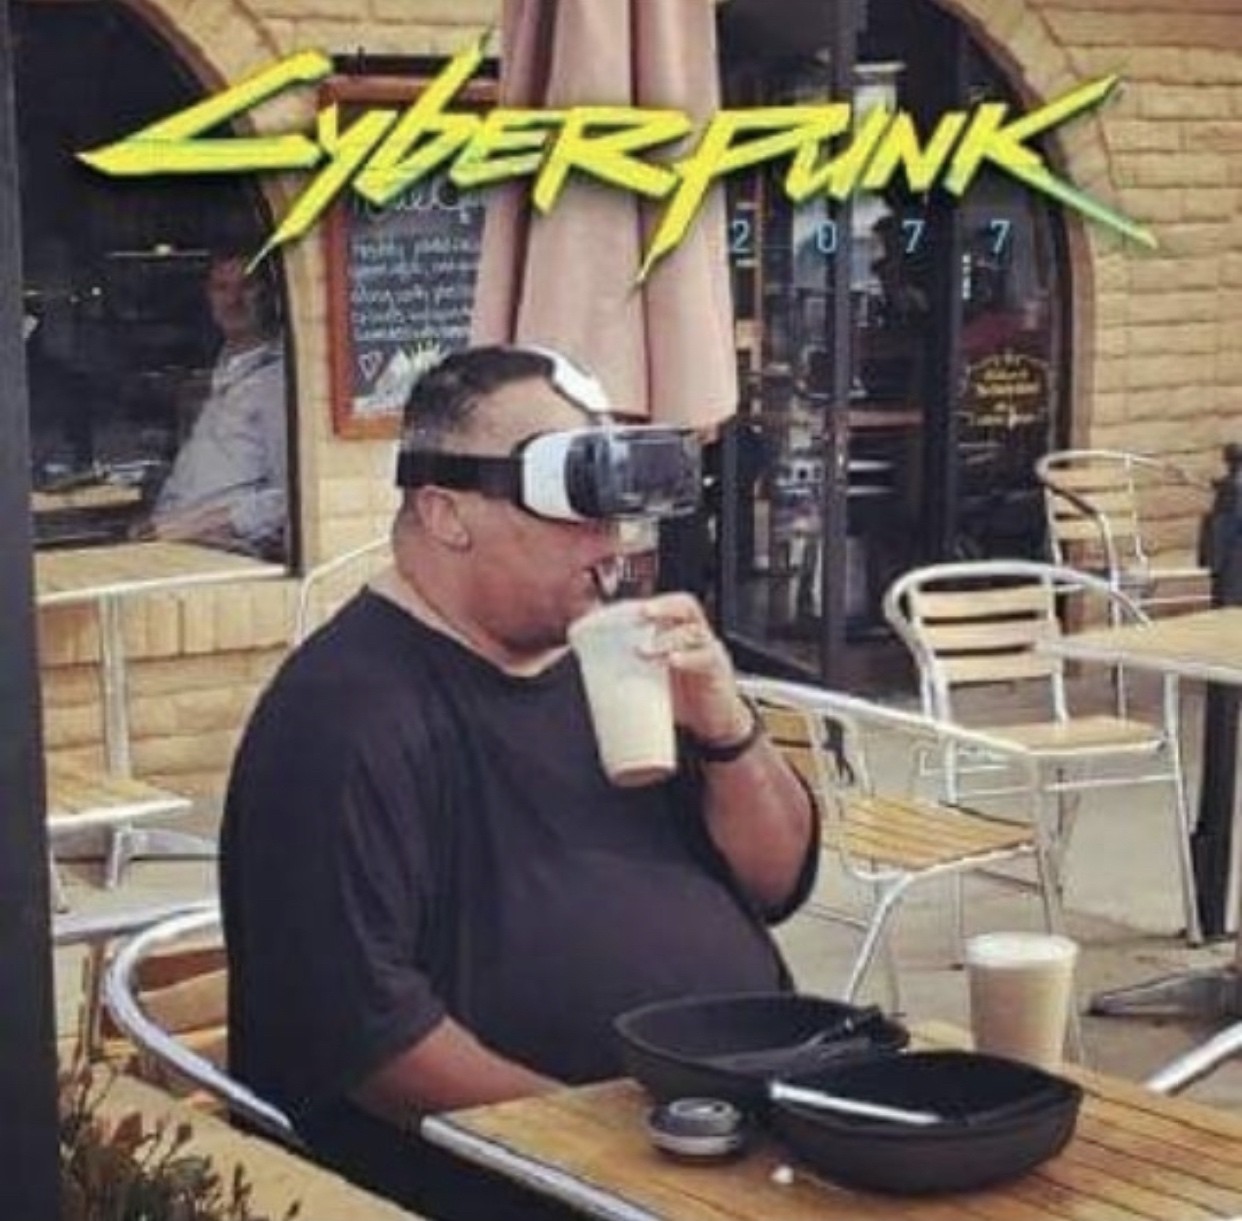 cyberpunk 2077 - vr goggles at a restaurant